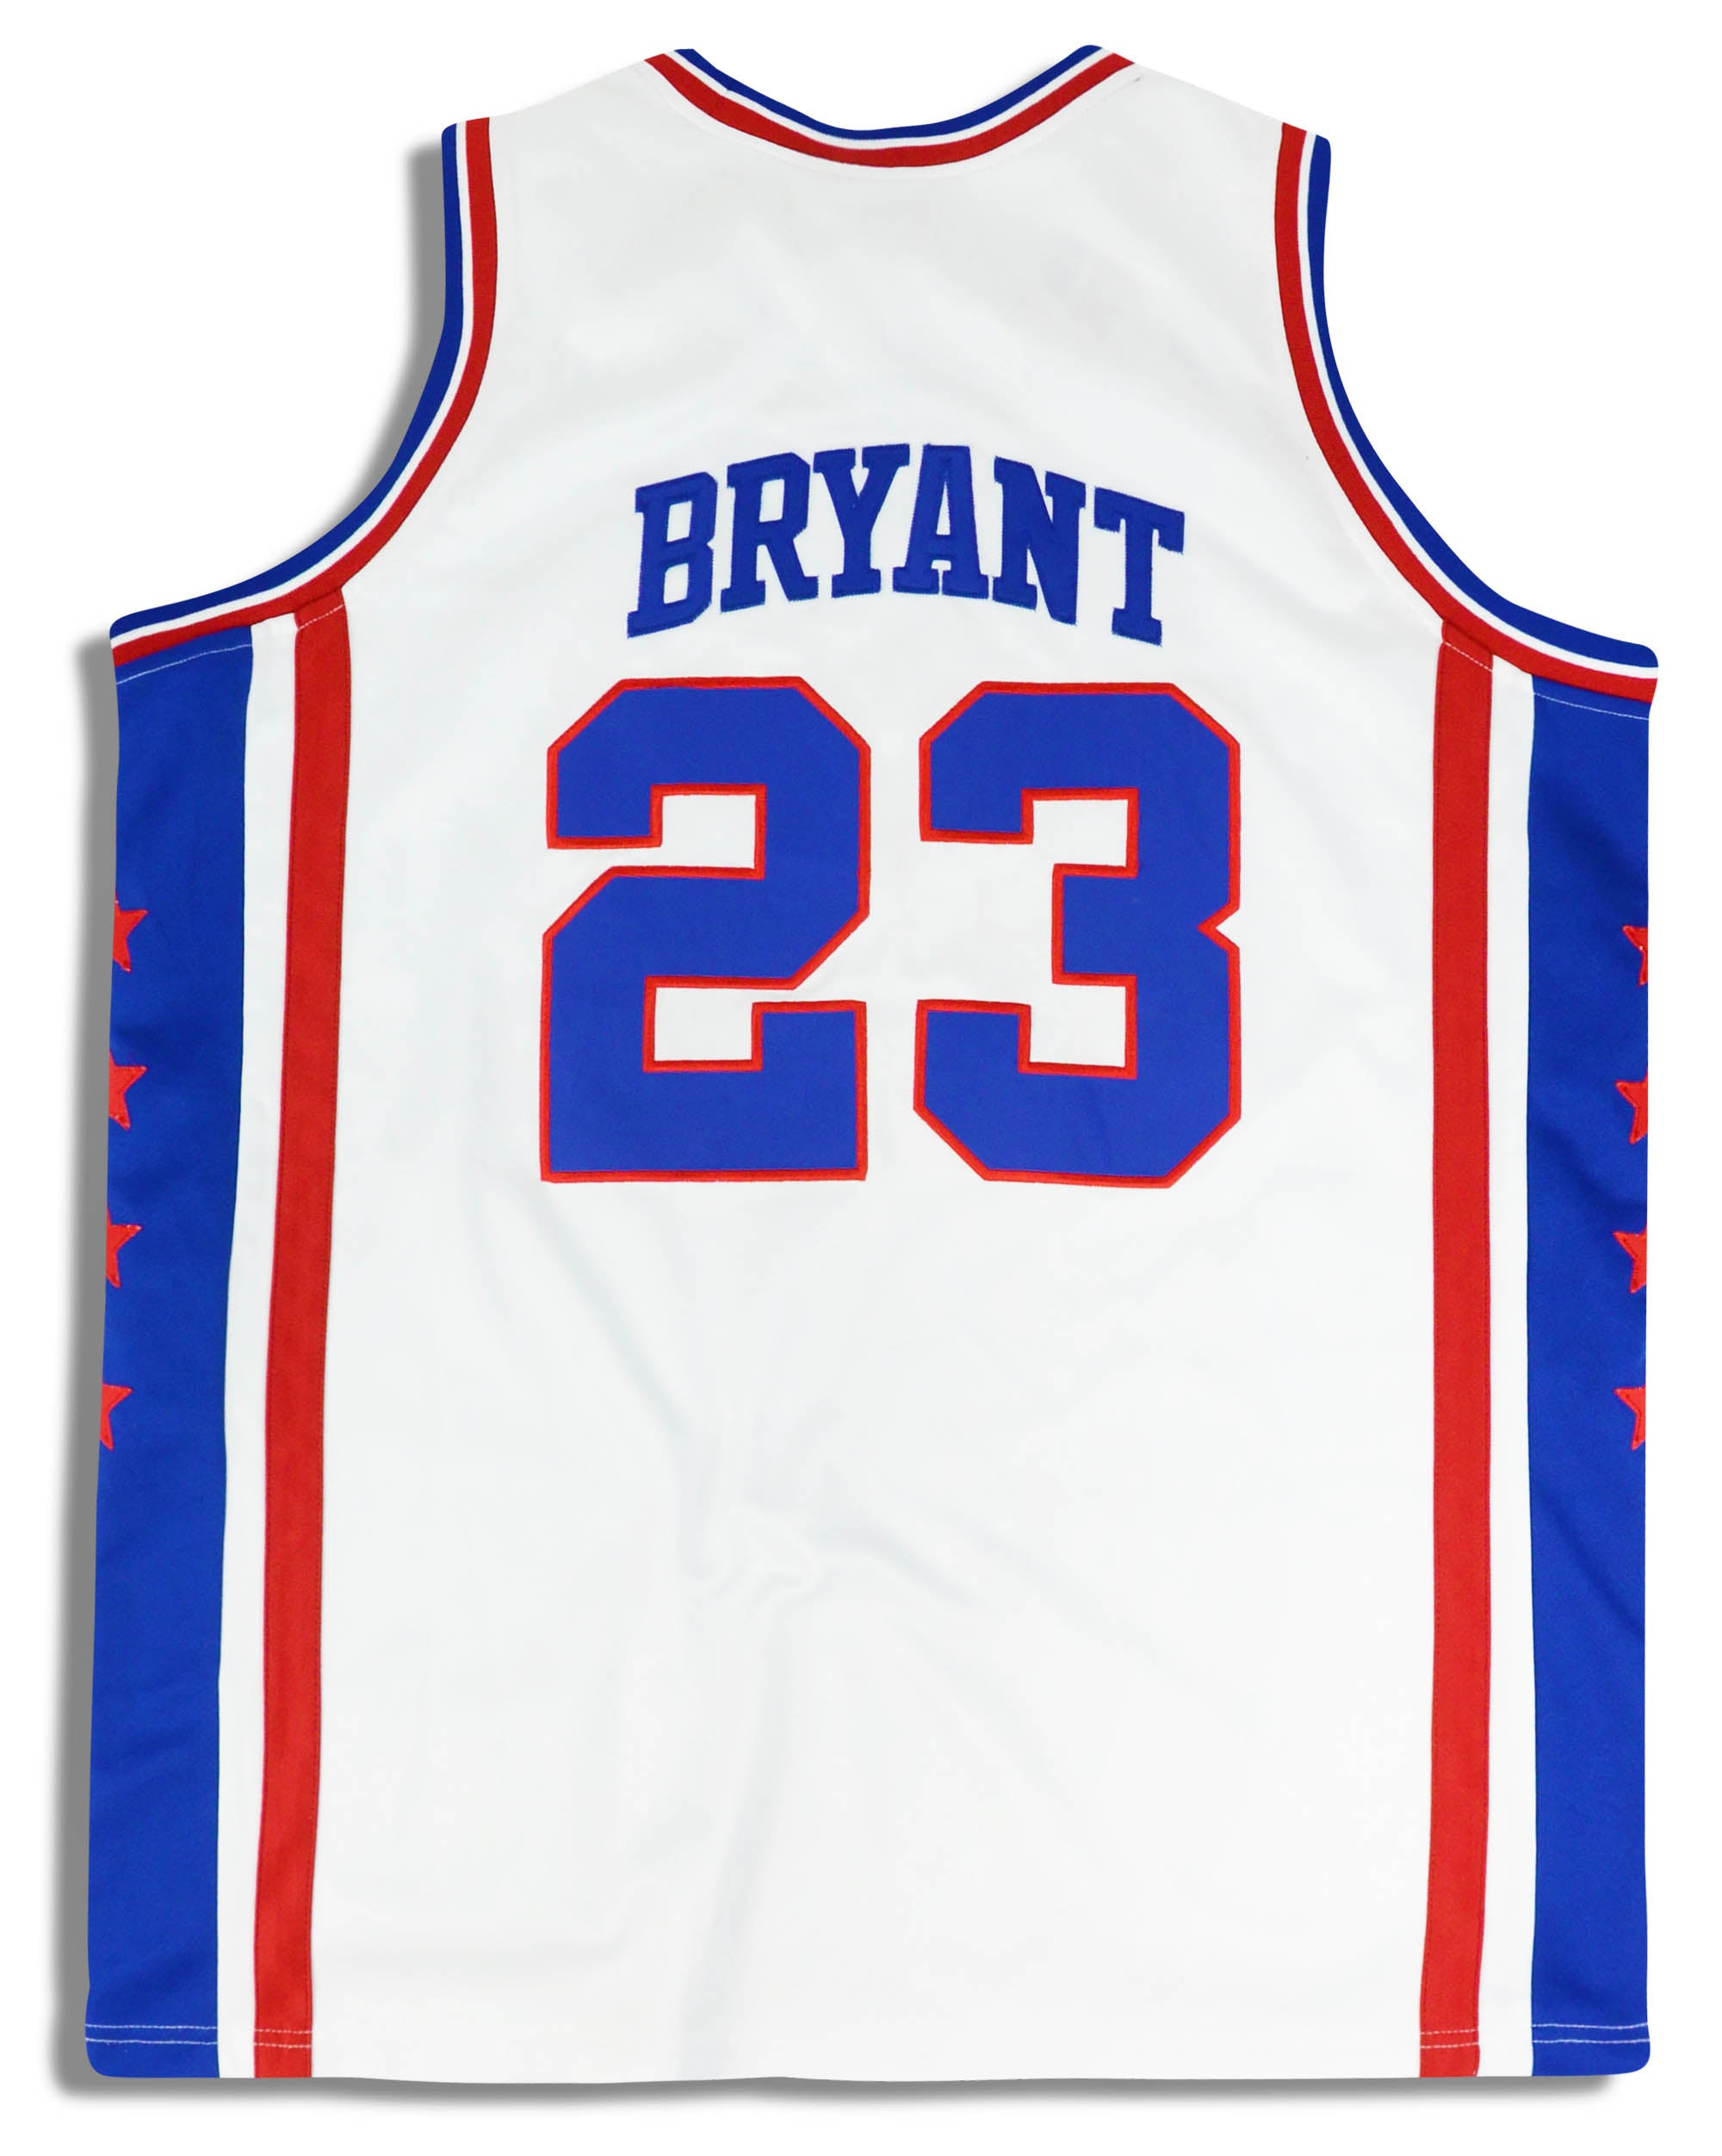 Kobe Bryant McDonald's All American Hardwood Classic Jersey